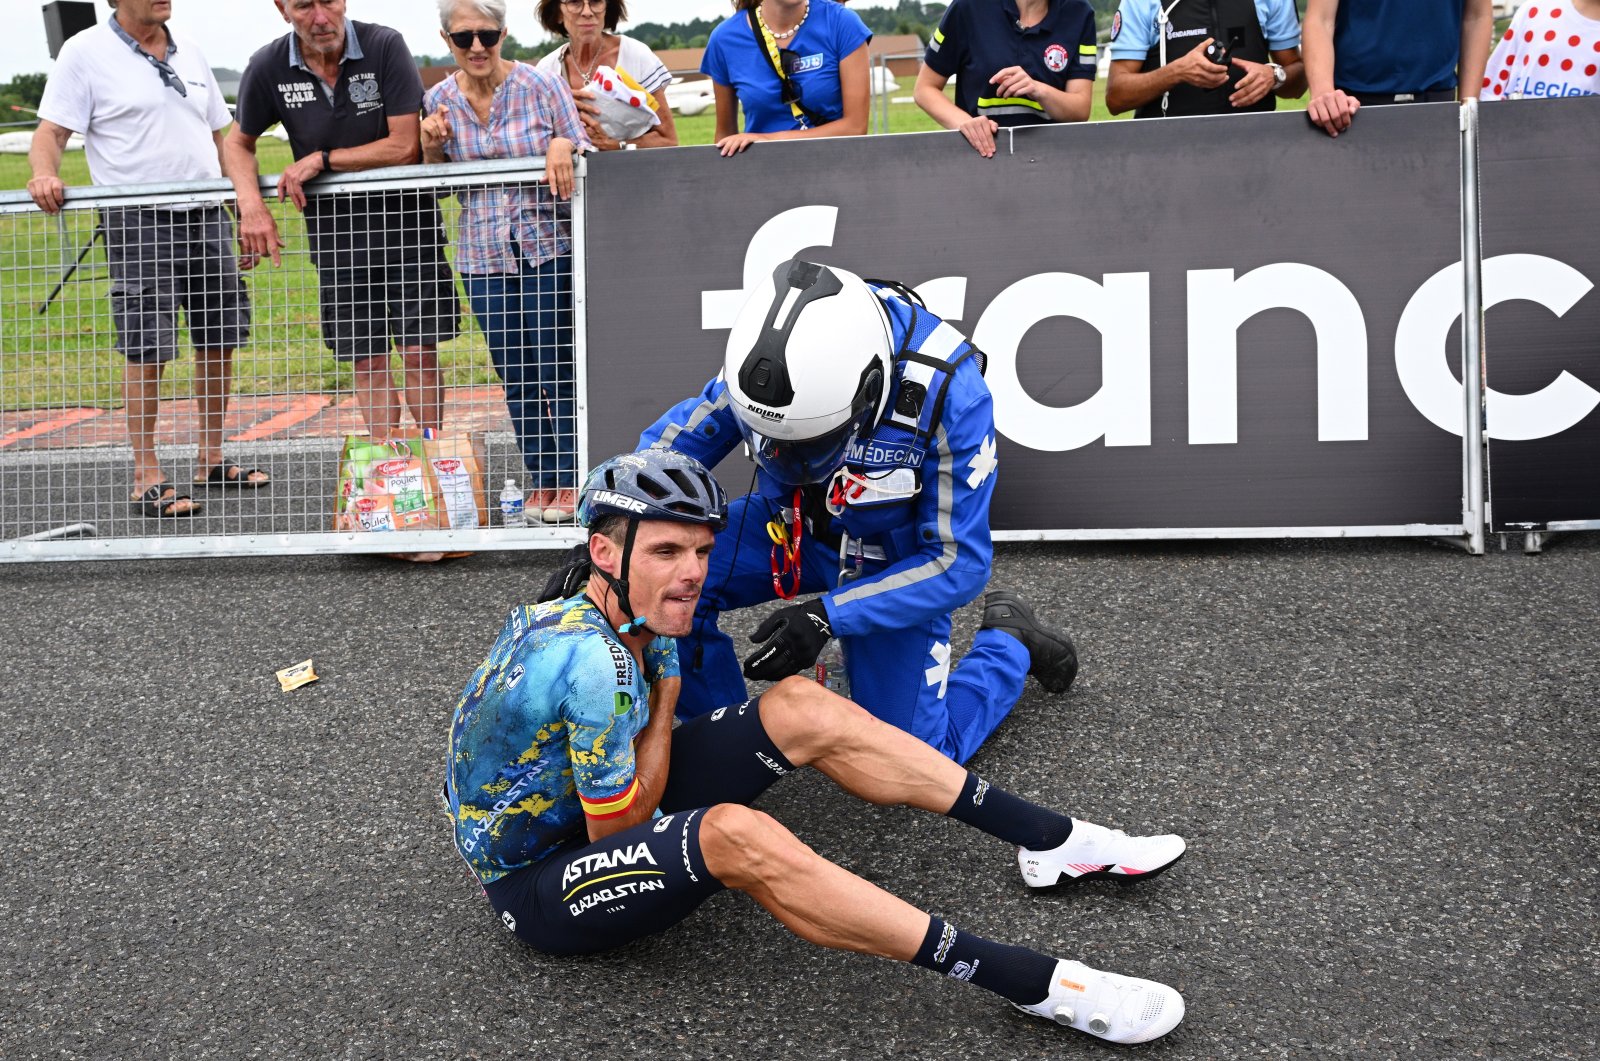 Kemunduran bagi Sanchez saat Tour de France mengalami kecelakaan memaksa penarikan diri